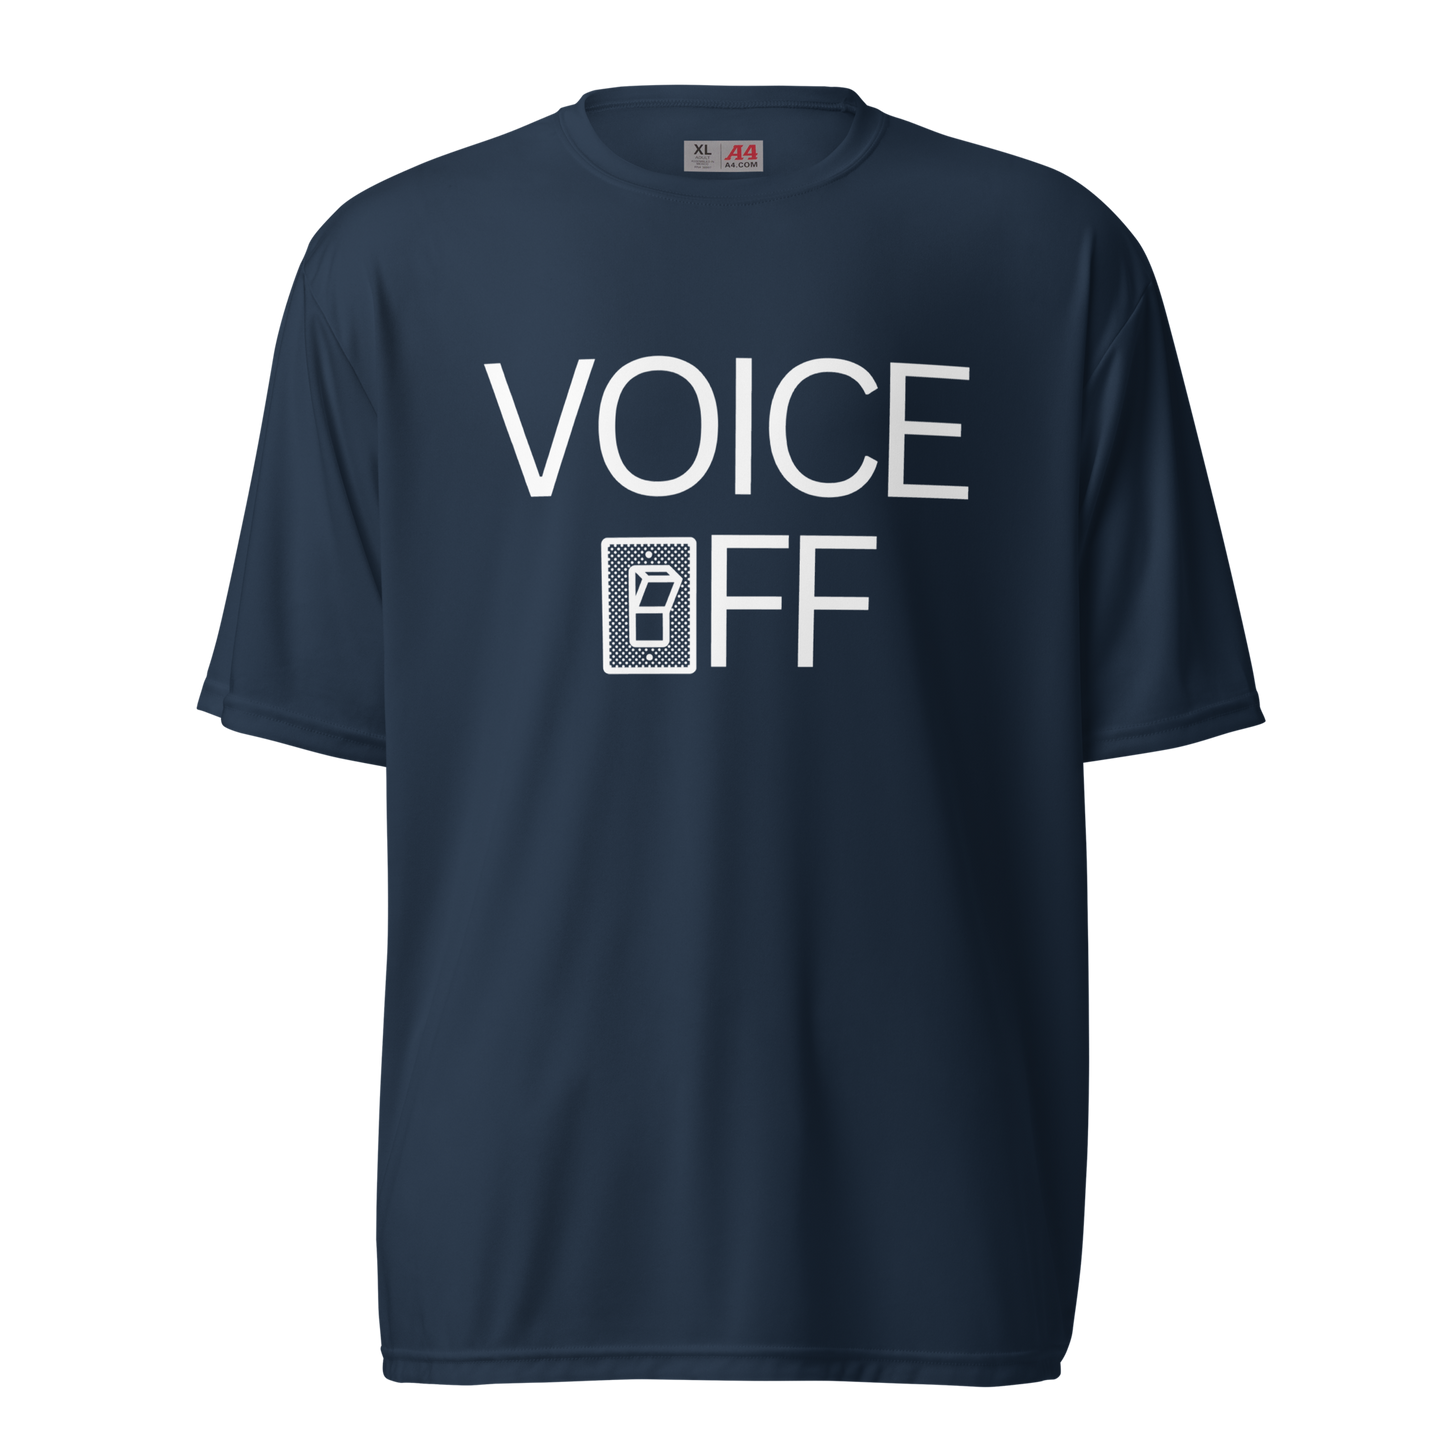 Voice Off Unisex Performance T-Shirt